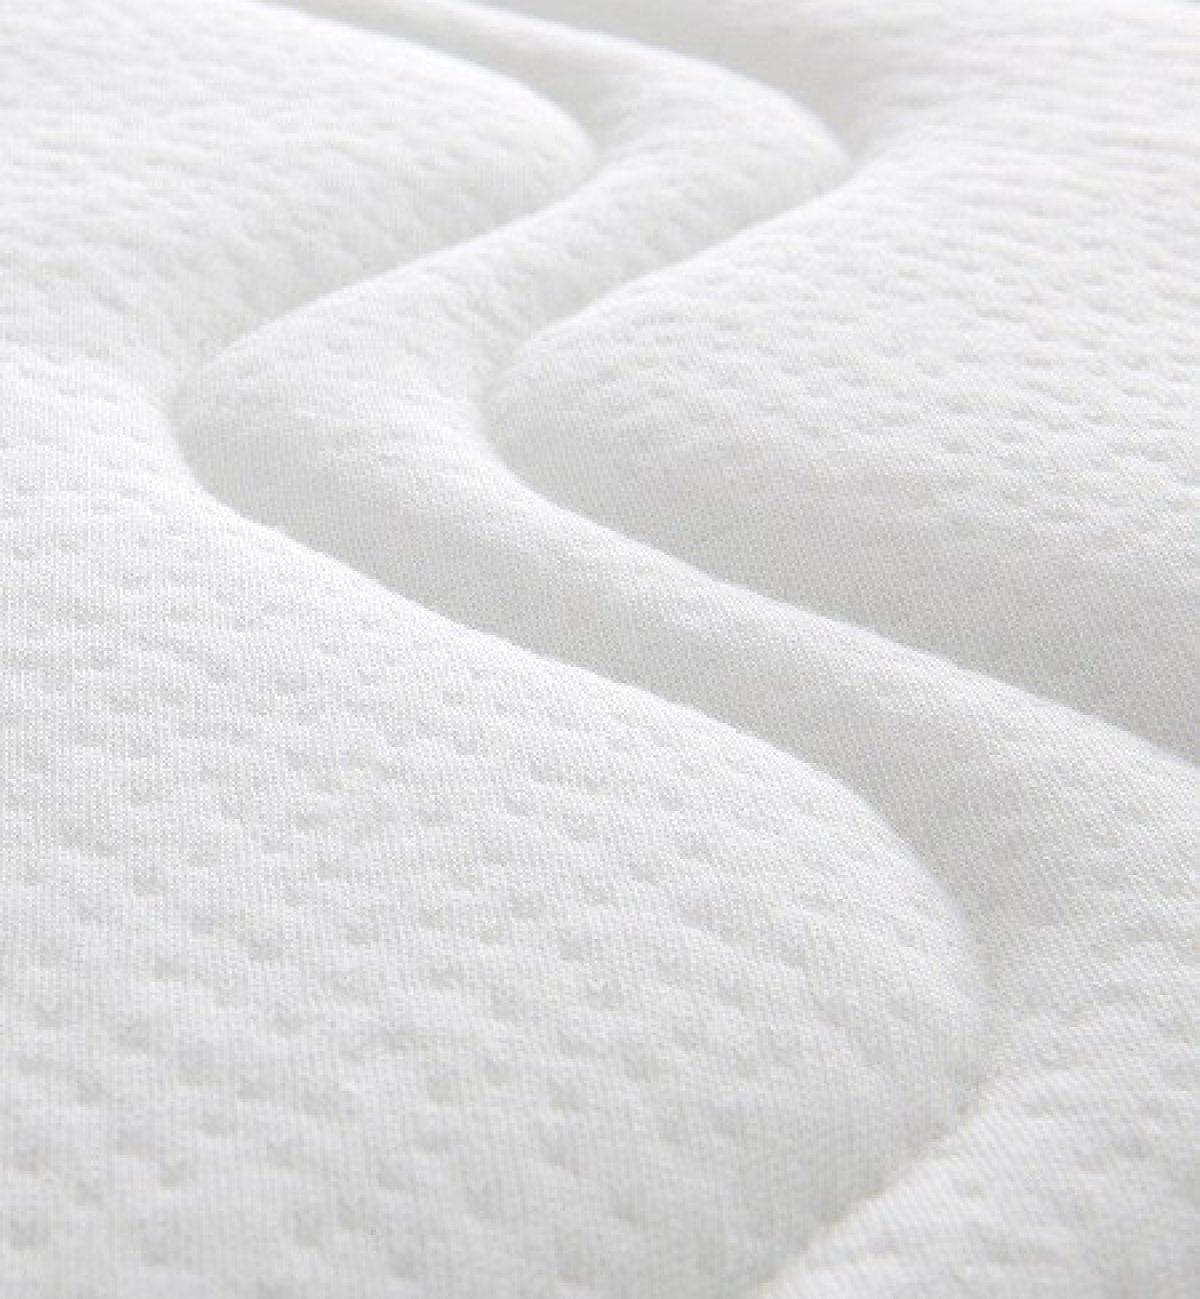 Padded adult mattress cover with Aloe Vera Kadolis